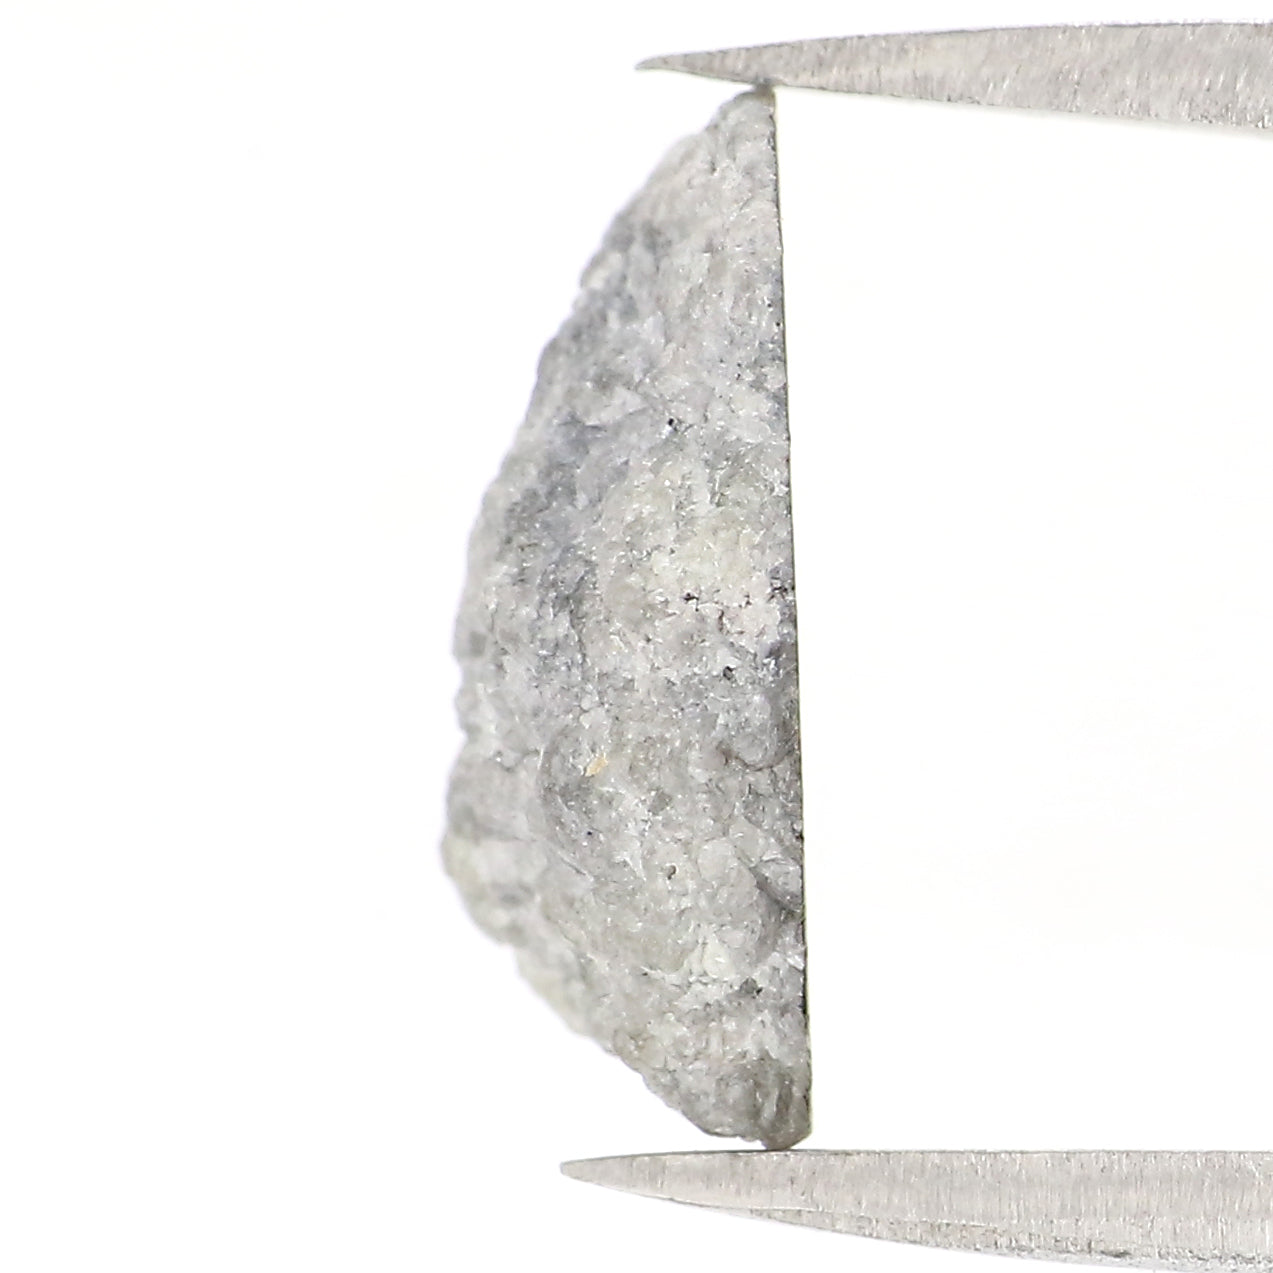 Natural Loose Rough Diamond, Natural Loose Diamond, Rough Grey Color Diamond, Uncut Diamonds, Rough Cut Diamond, 4.60 CT Rough Shape L2798